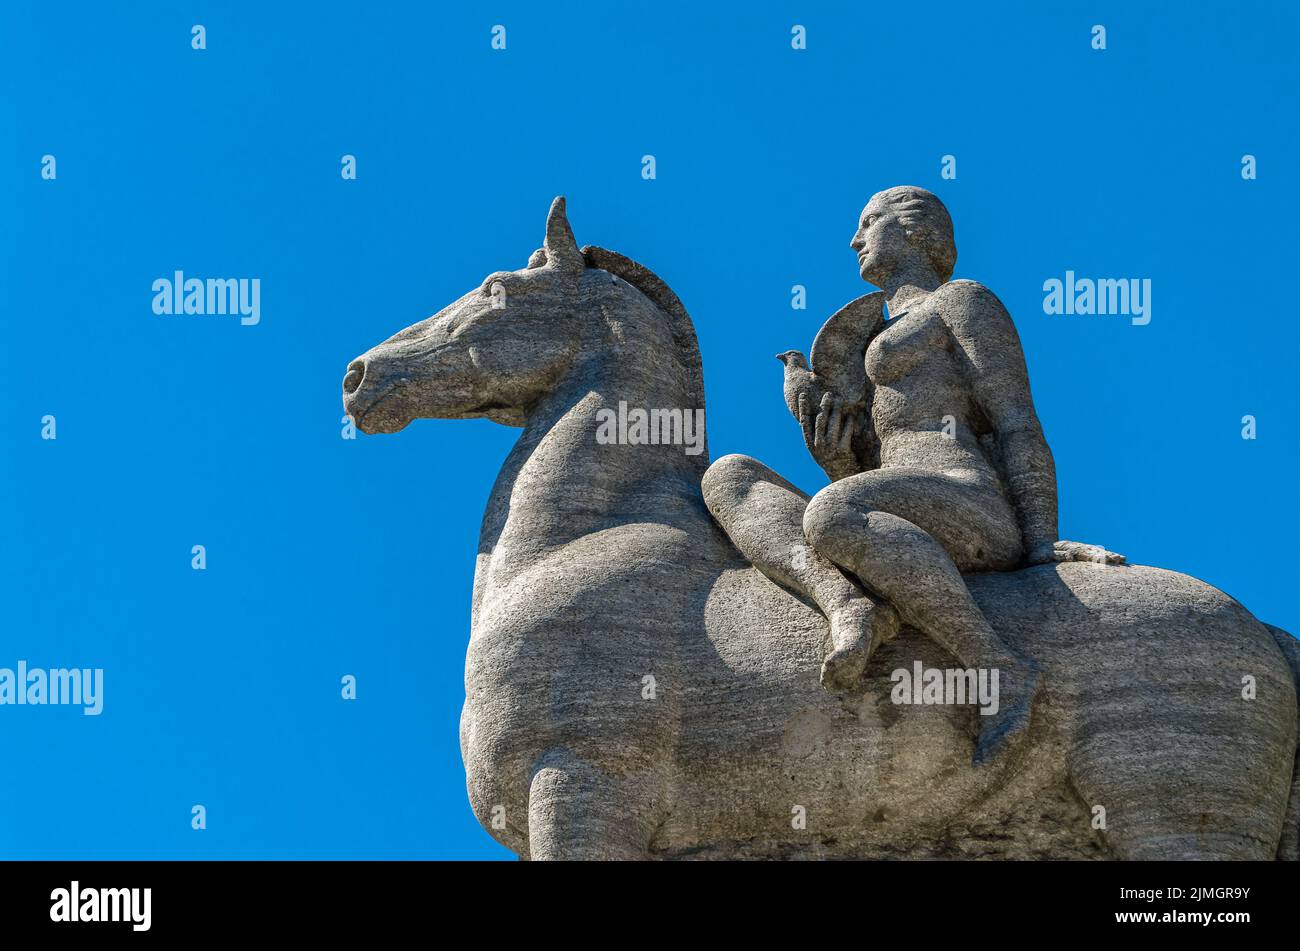 GENEVA, SWITZERLAND - SEPTEMBER 4, 2013: View of the statue 'Colombe de la Paix' ('Peace dove'), located in Geneva, made by the Swiss sculptor Frederi Stock Photo